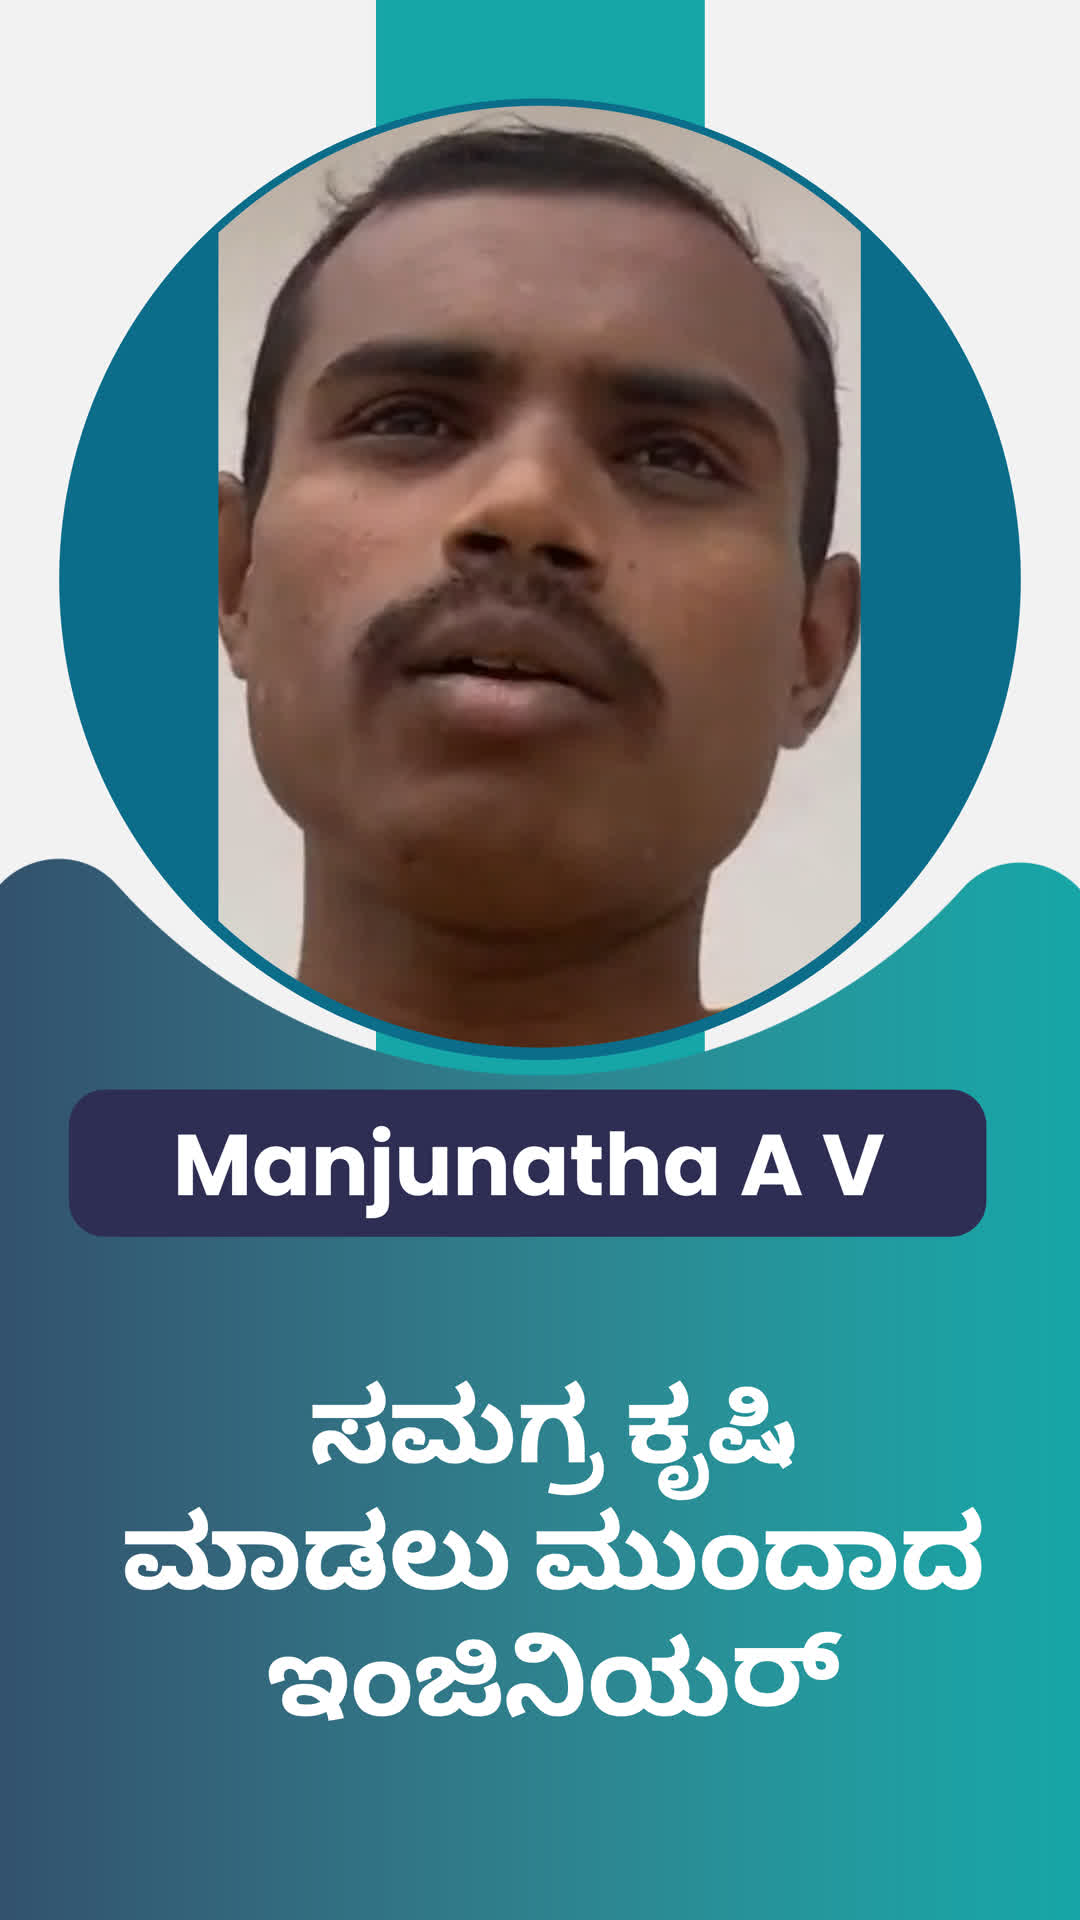 Manjunatha A V's Honest Review of ffreedom app - Kolar ,Karnataka